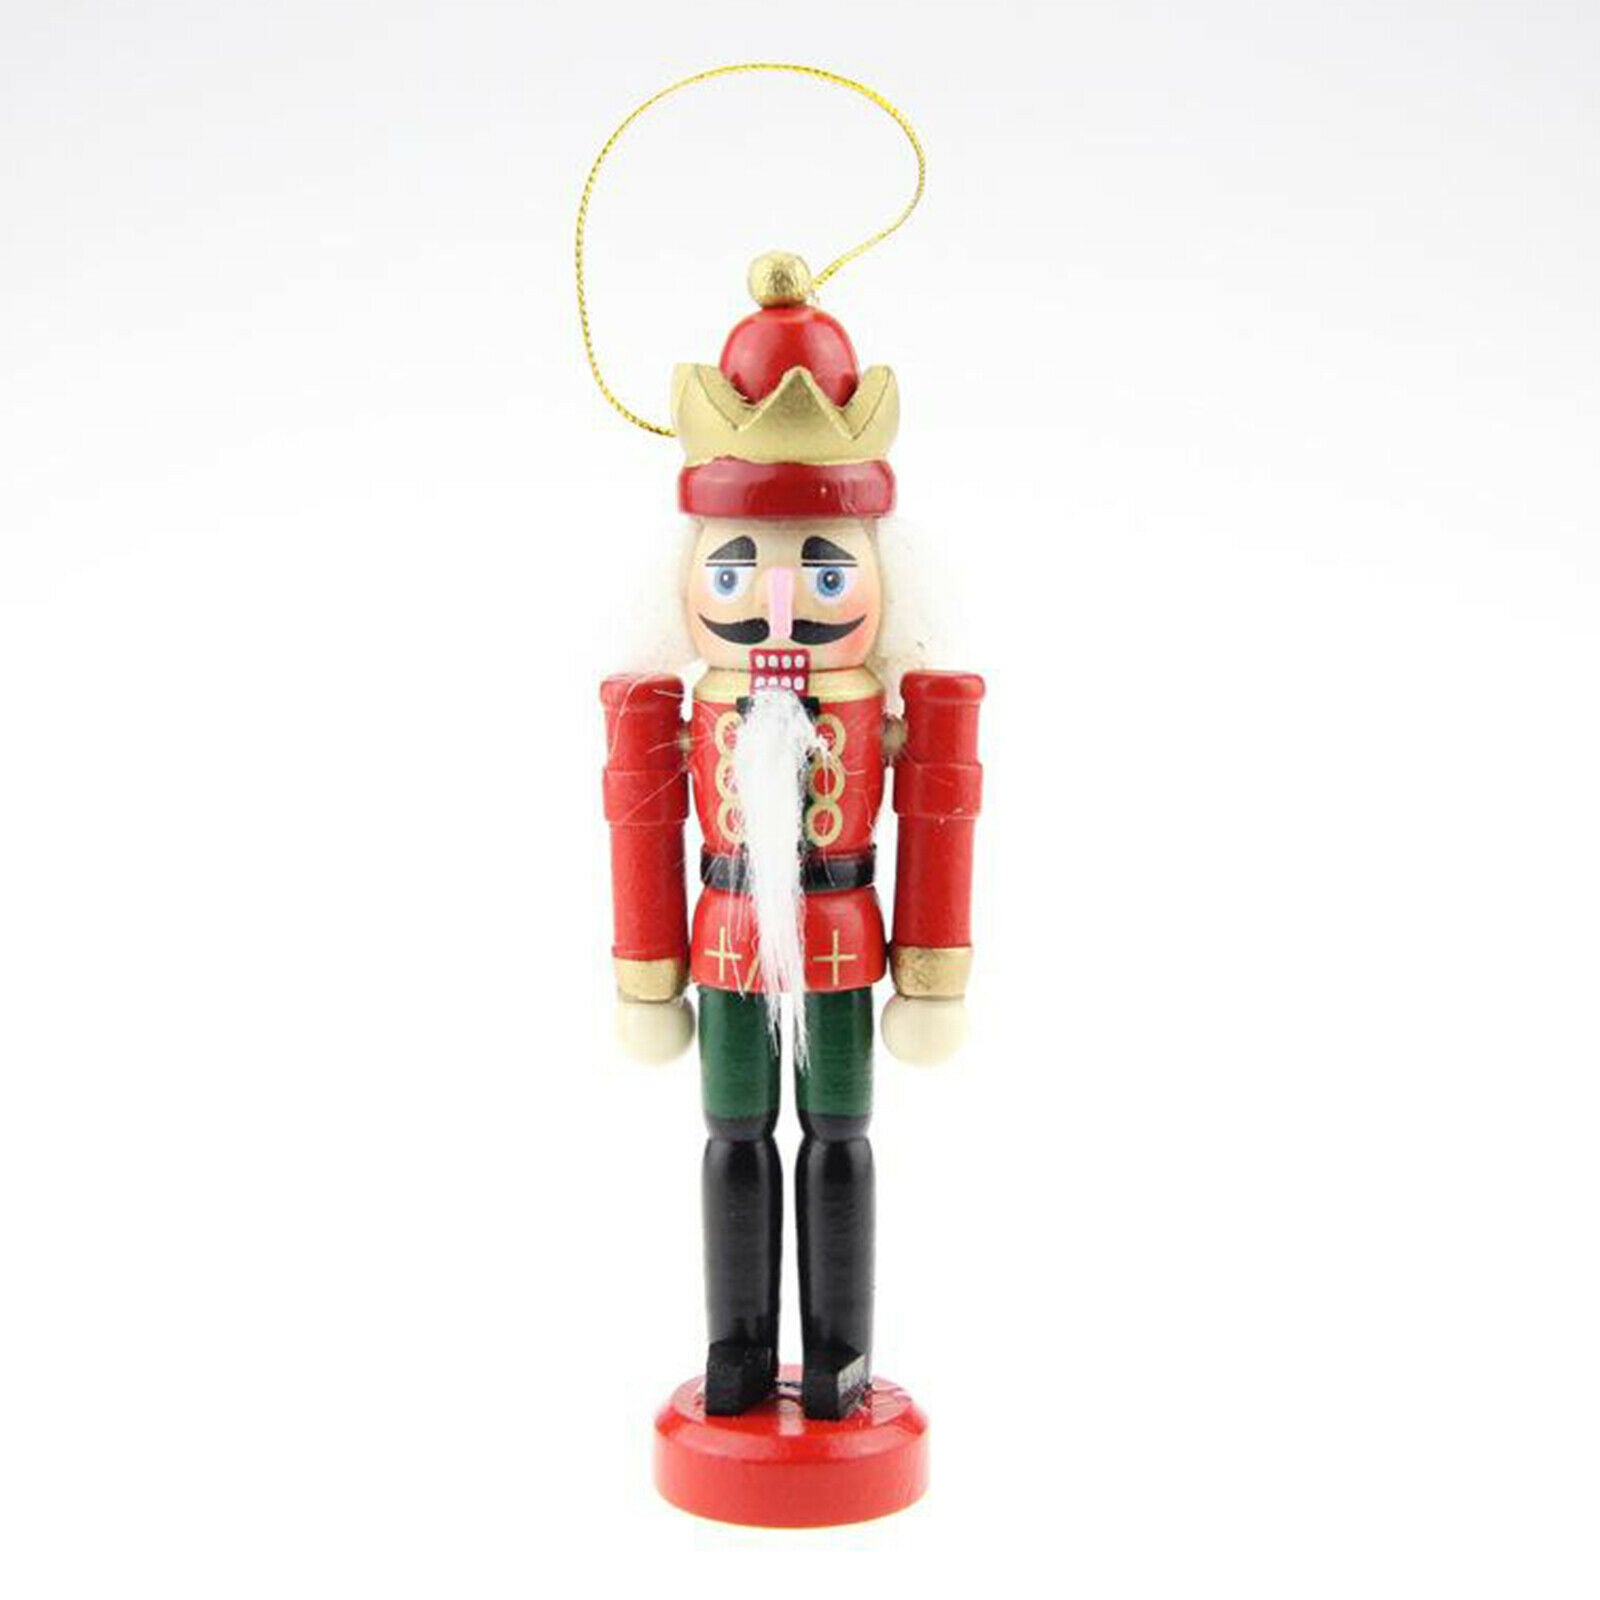 6pcs/set Mini Wooden Nutcracker Soldier Gift Christmas Ornaments Decor 5''